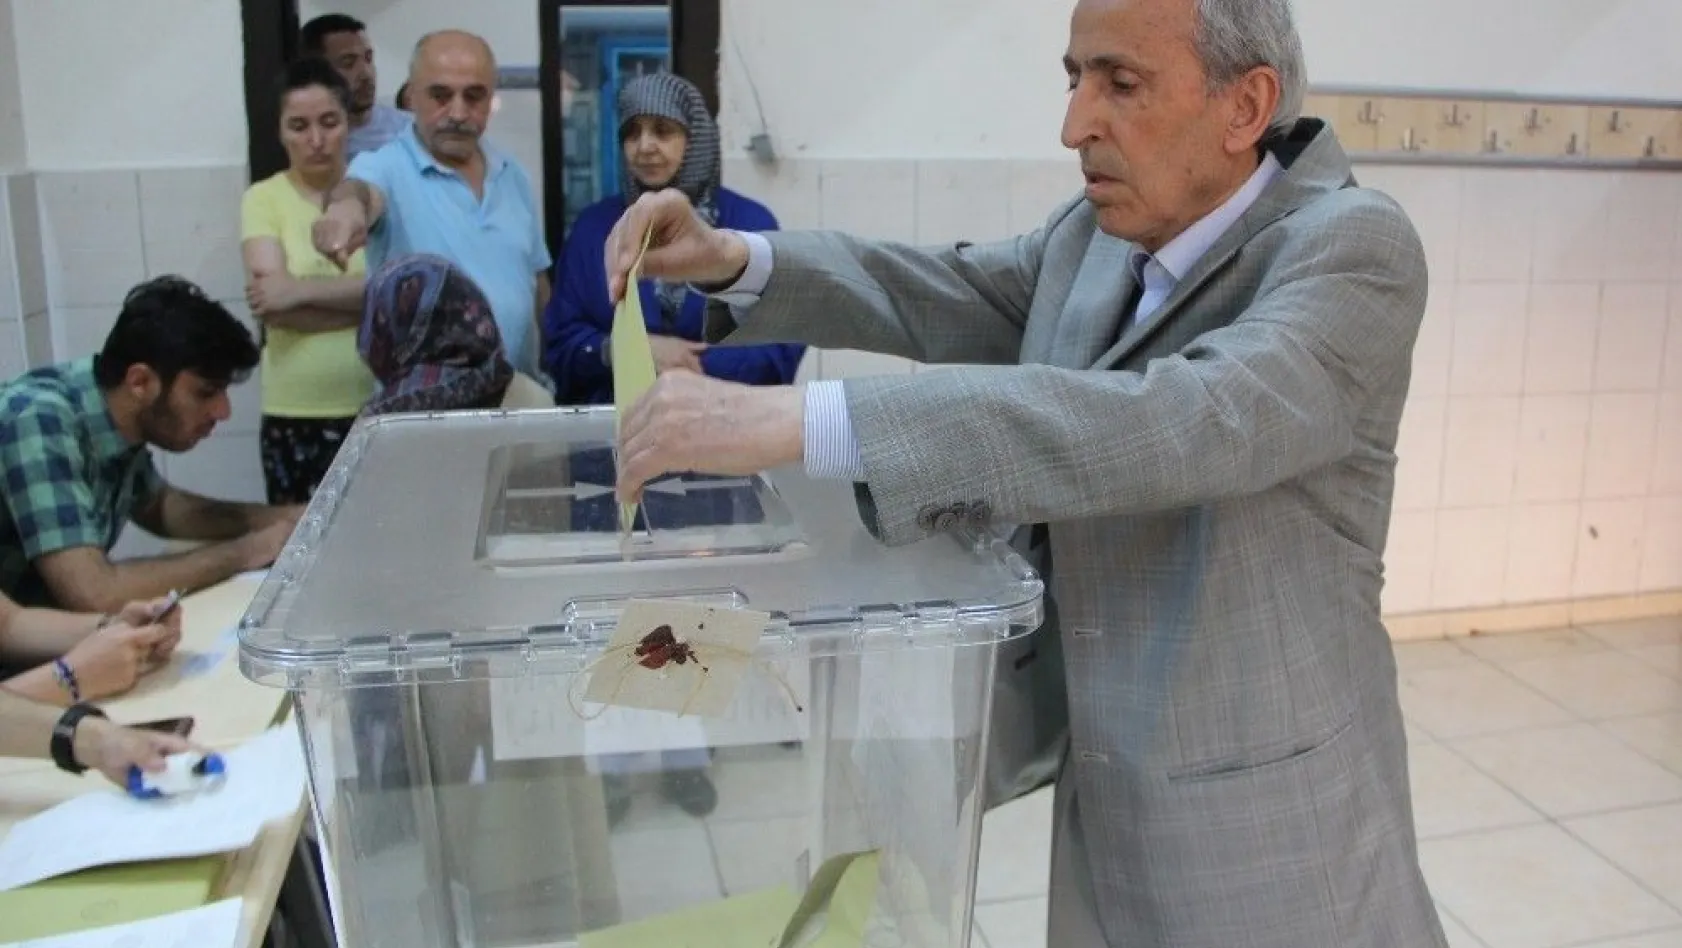 Malatya'da ilk oylar kullanılmaya başlandı
